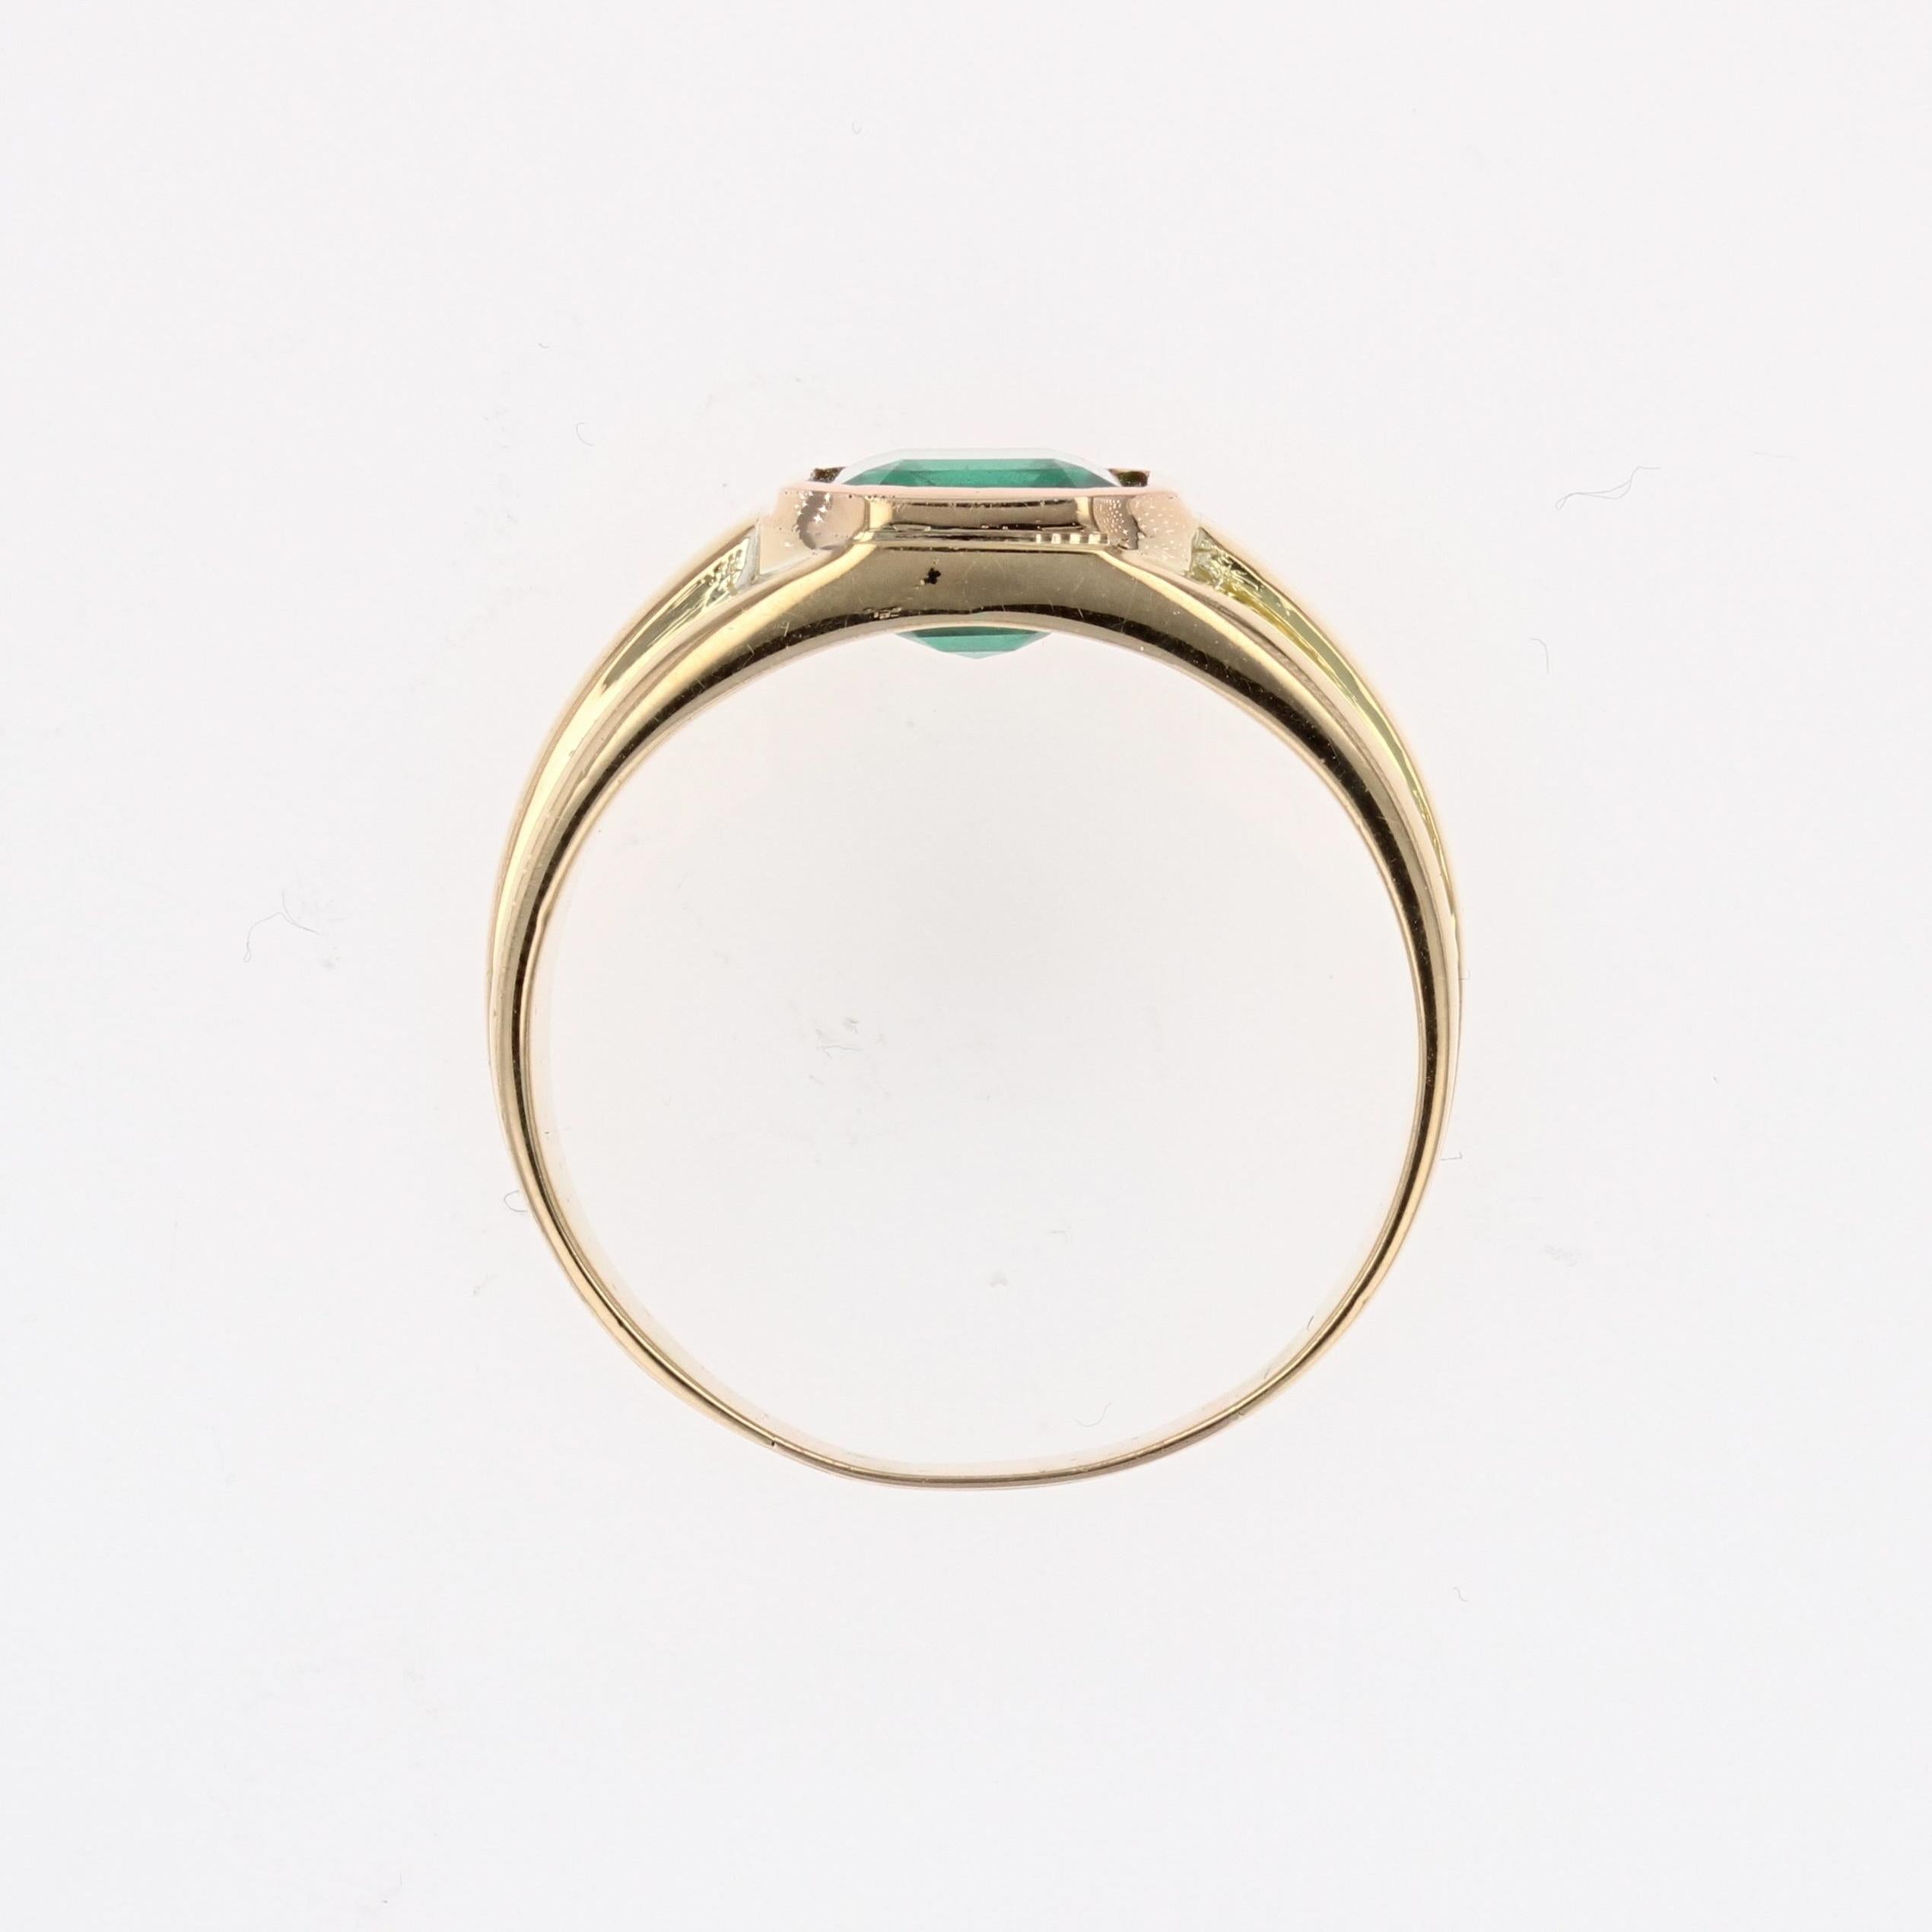 1950s Certified 2.92 Carat Emerald 18 Karat Yellow Gold Ring For Sale 7